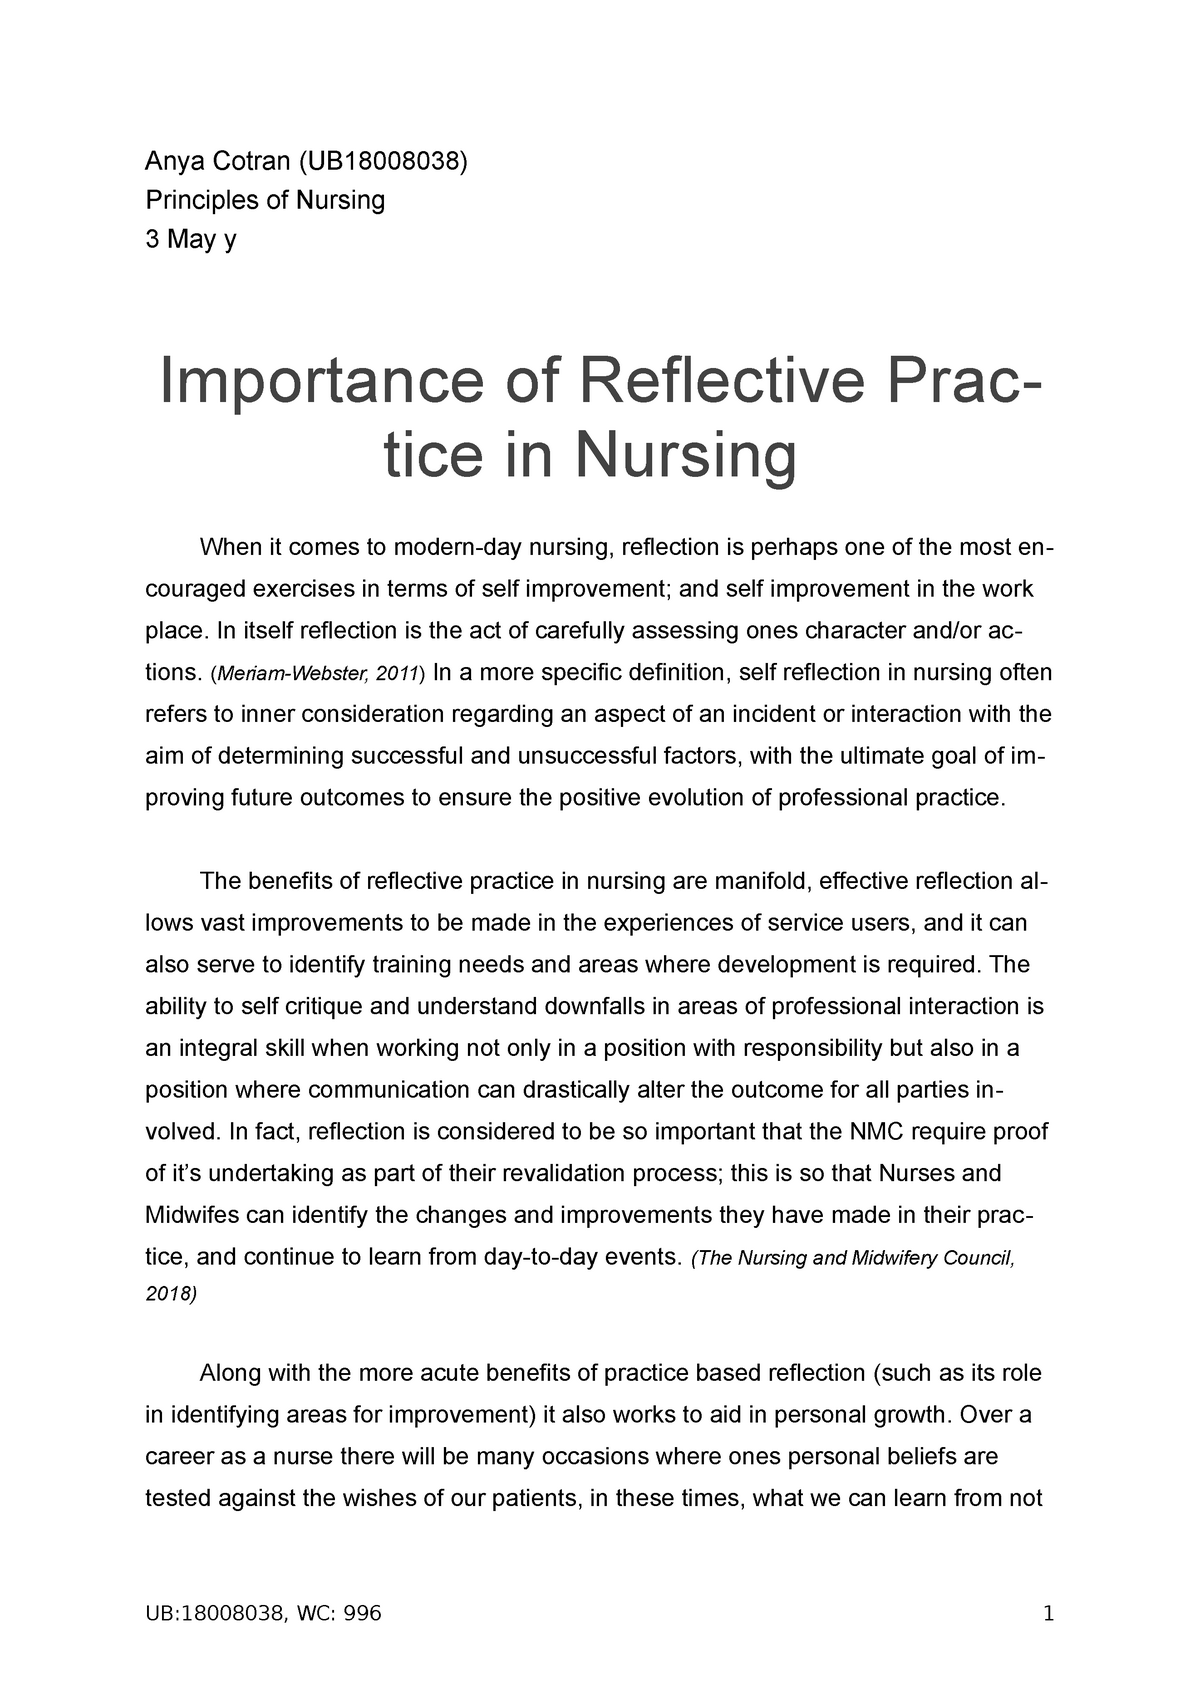 reflective practice in nursing powerpoint presentation